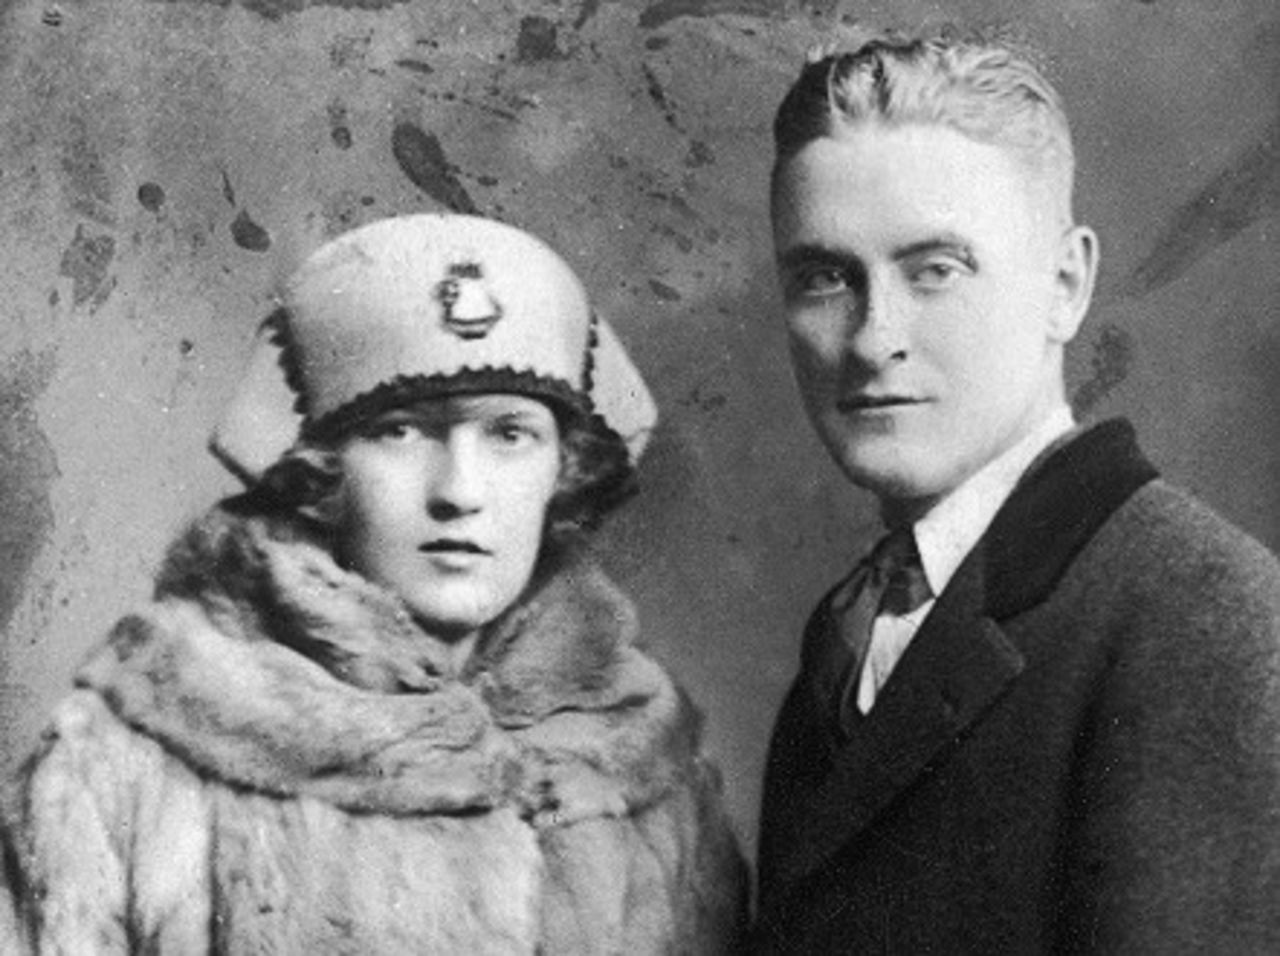 Portrait of F. Scott Fitzgerald and his wife Zelda in 1921.